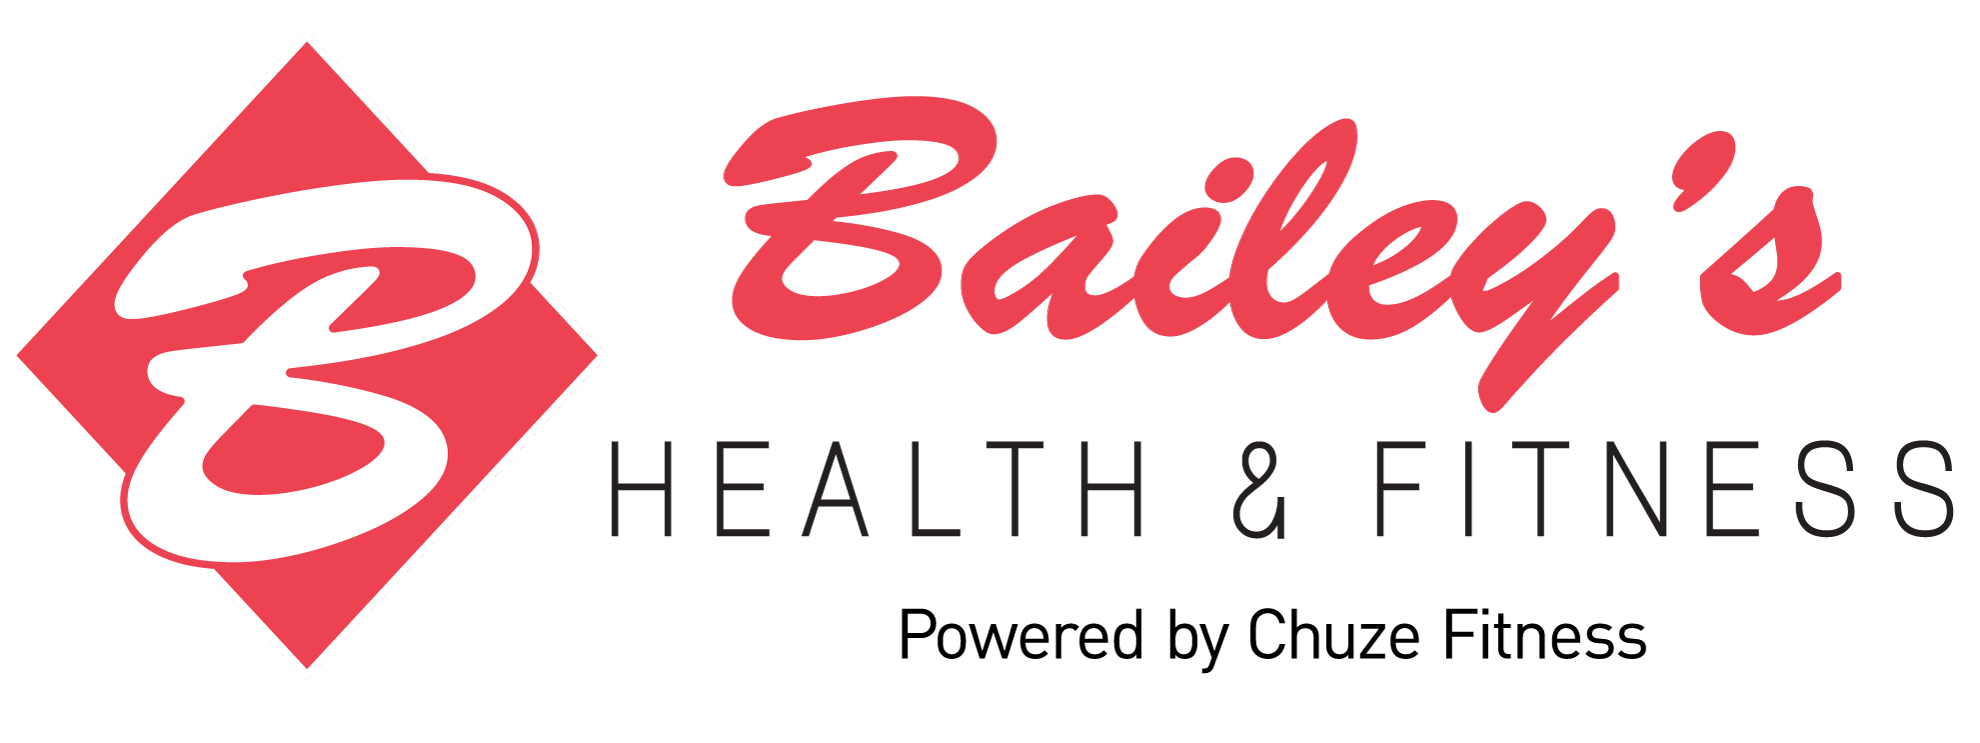 Bailey's Health & Fitness